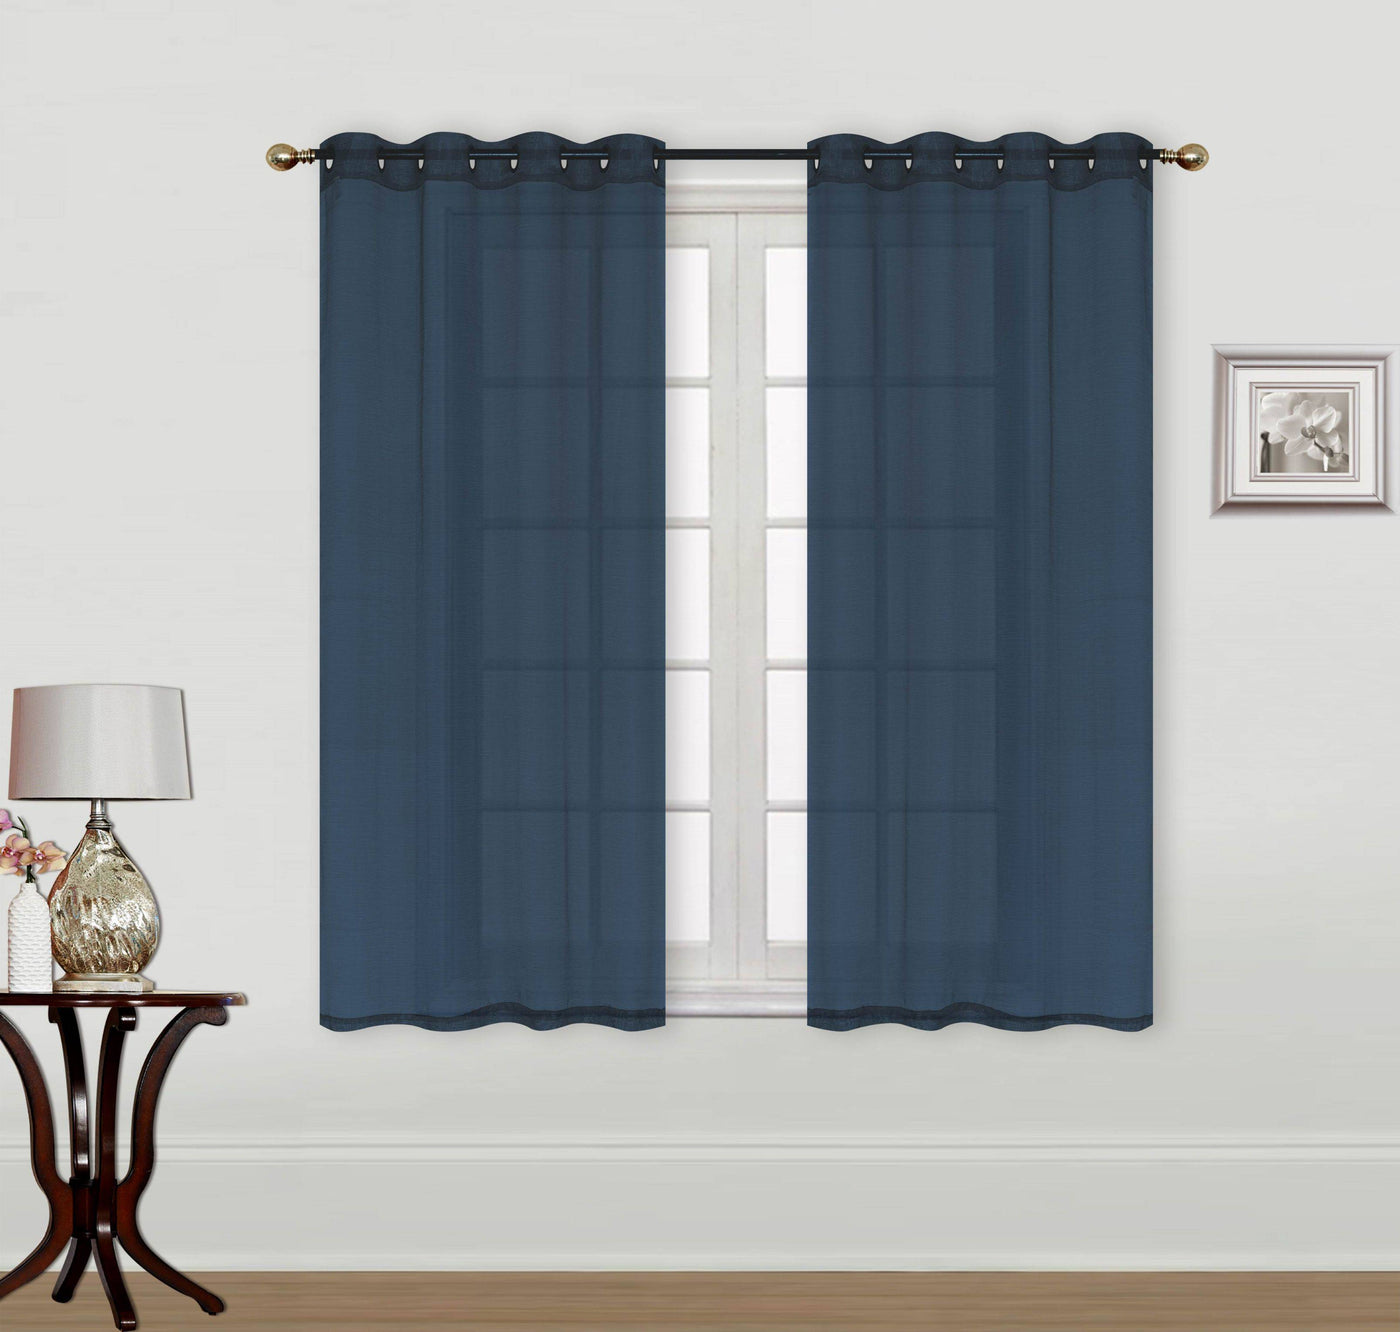 2 Piece Sheer Voile Window Curtain Grommet Panels Light Filtering